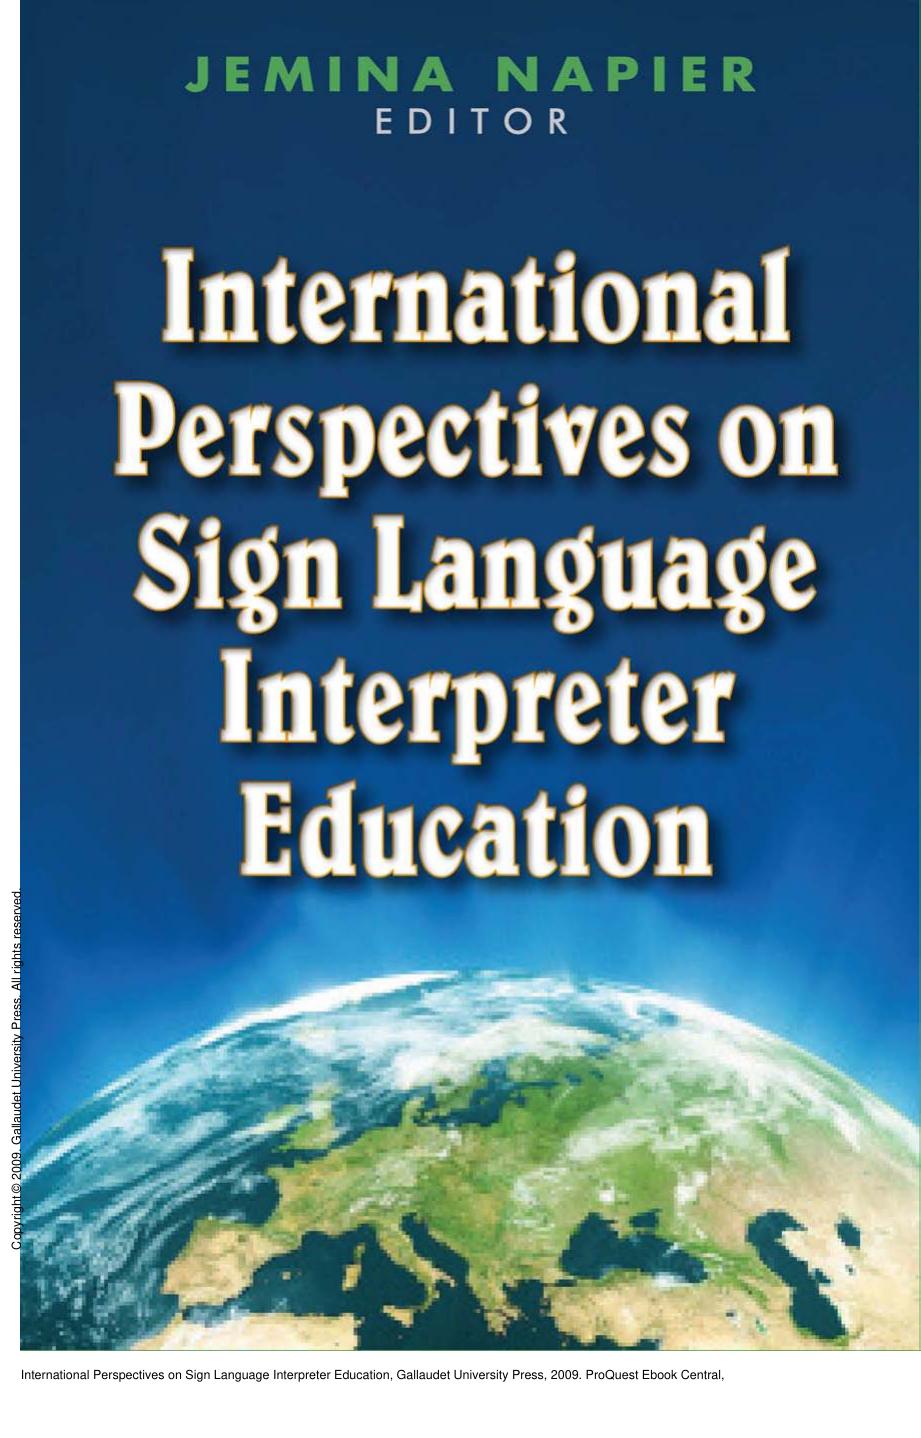 International Perspectives on Sign Language Interpreter Education by Jemina Napier